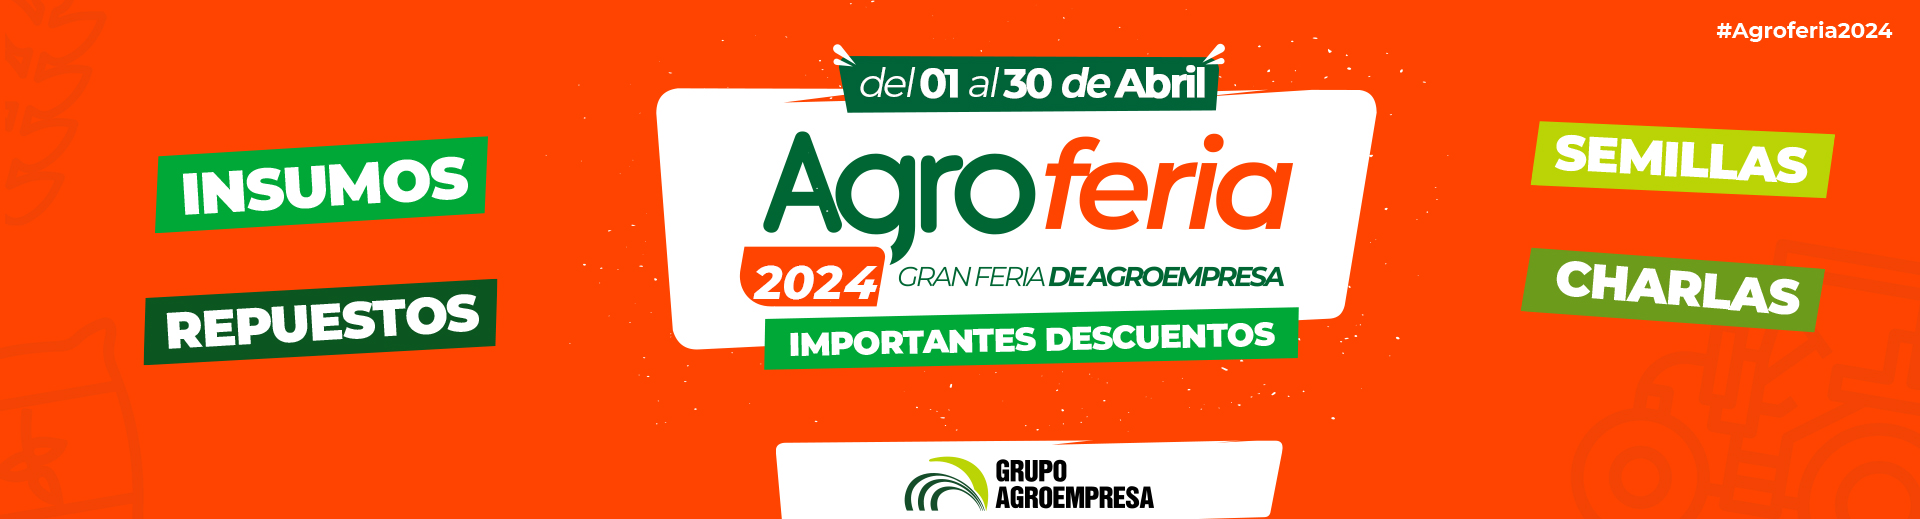 Agroferia 2024 - Grupo Agroempresa